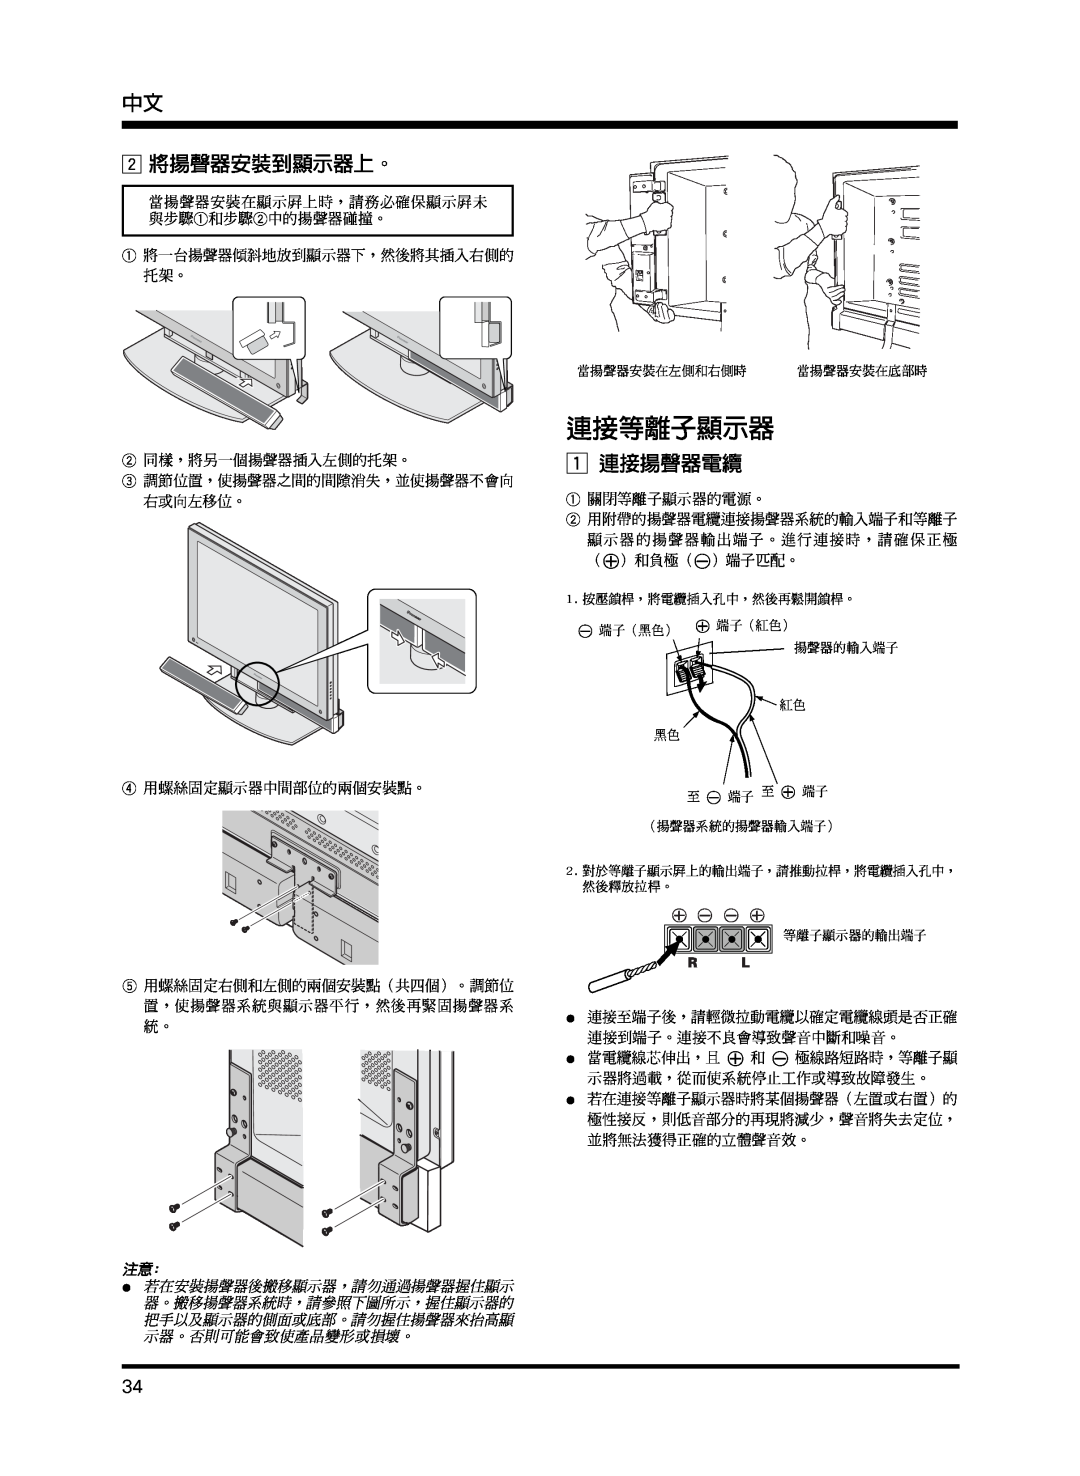 Pioneer PDP-S13-LR manual 連接等離子顯示器, 中文 2 將揚聲器安裝到顯示器上。, 1 連接揚聲器電纜 